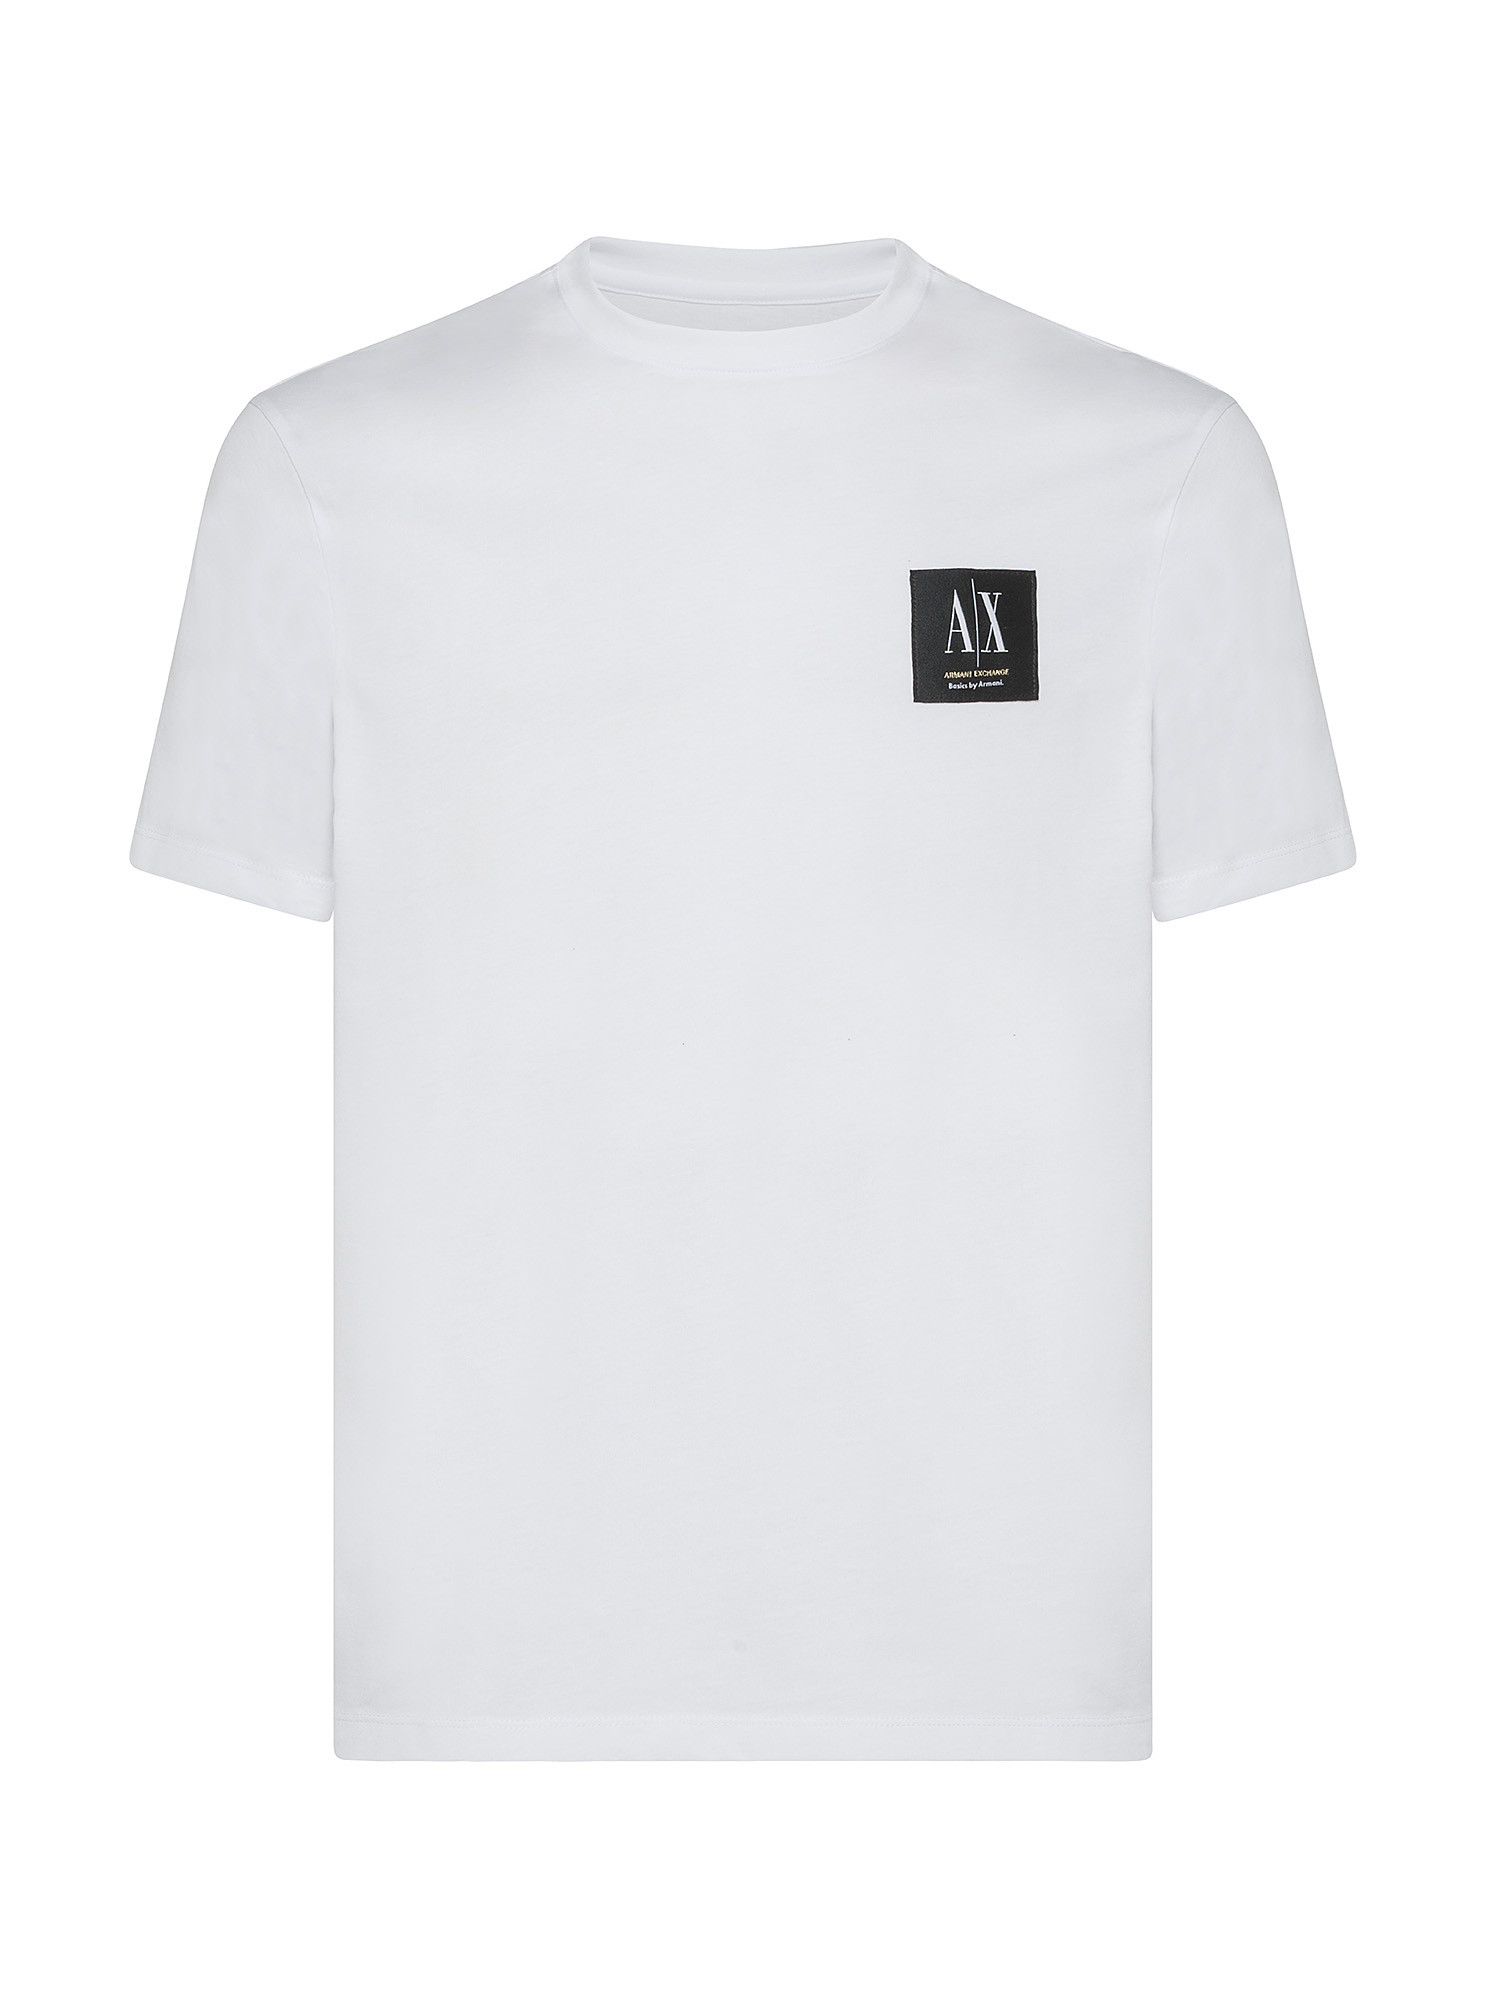 Armani Exchange - Regular fit T-shirt in organic cotton with logo, White, large image number 0